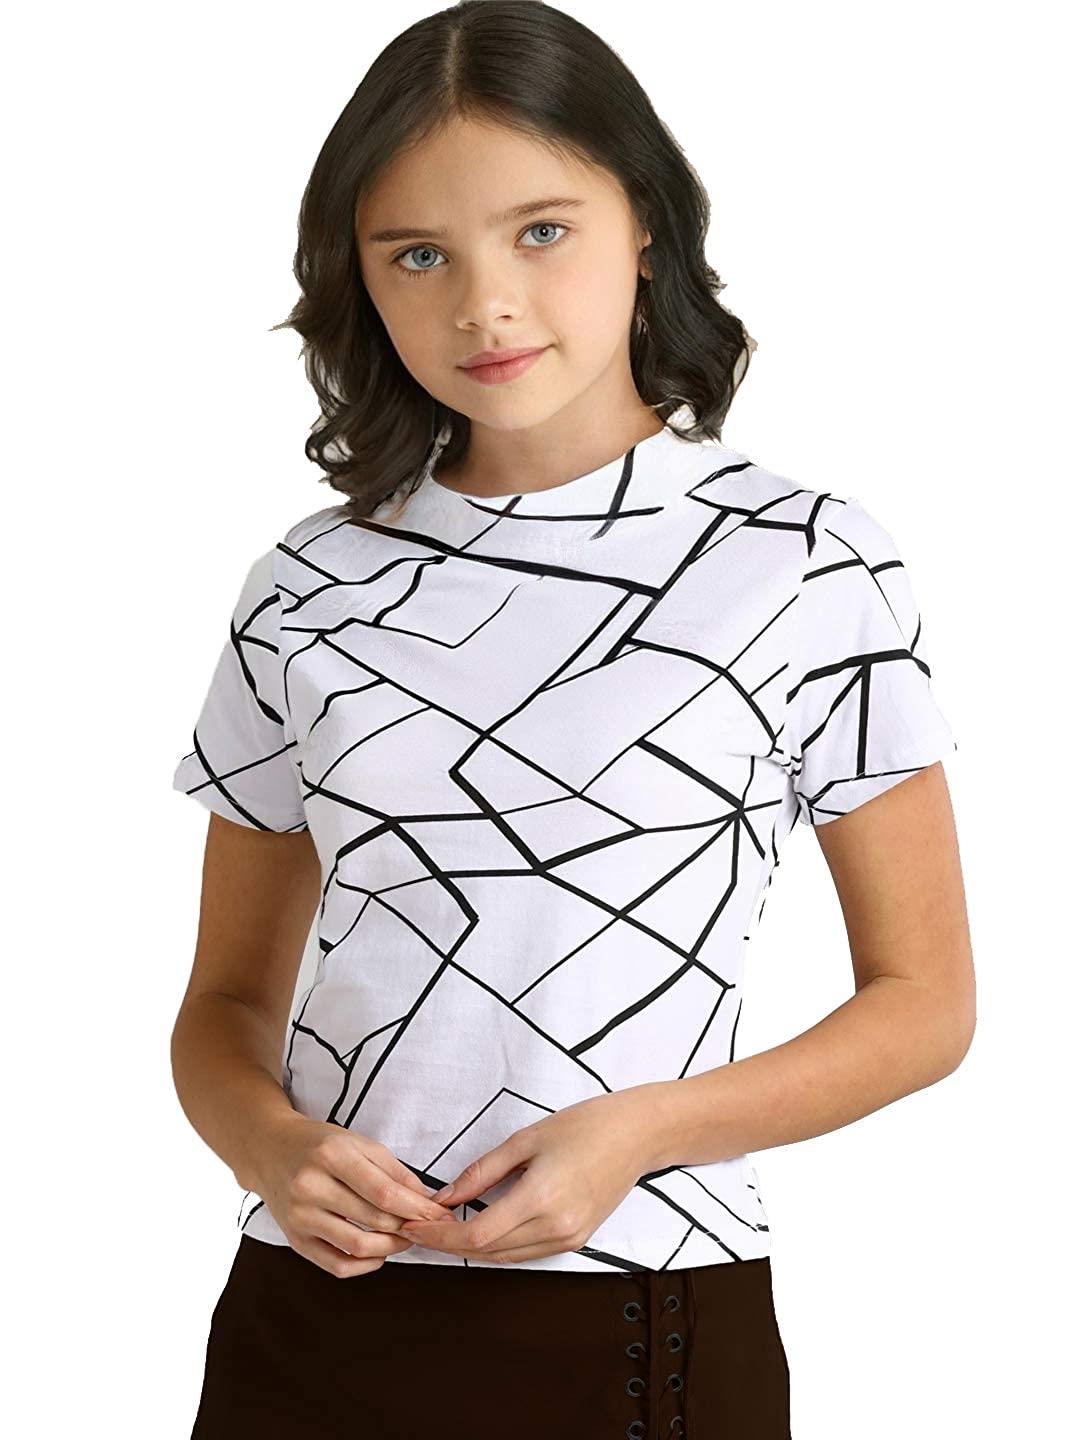 LEWEL Girls Cotton Printed Half Sleeve T-Shirt (